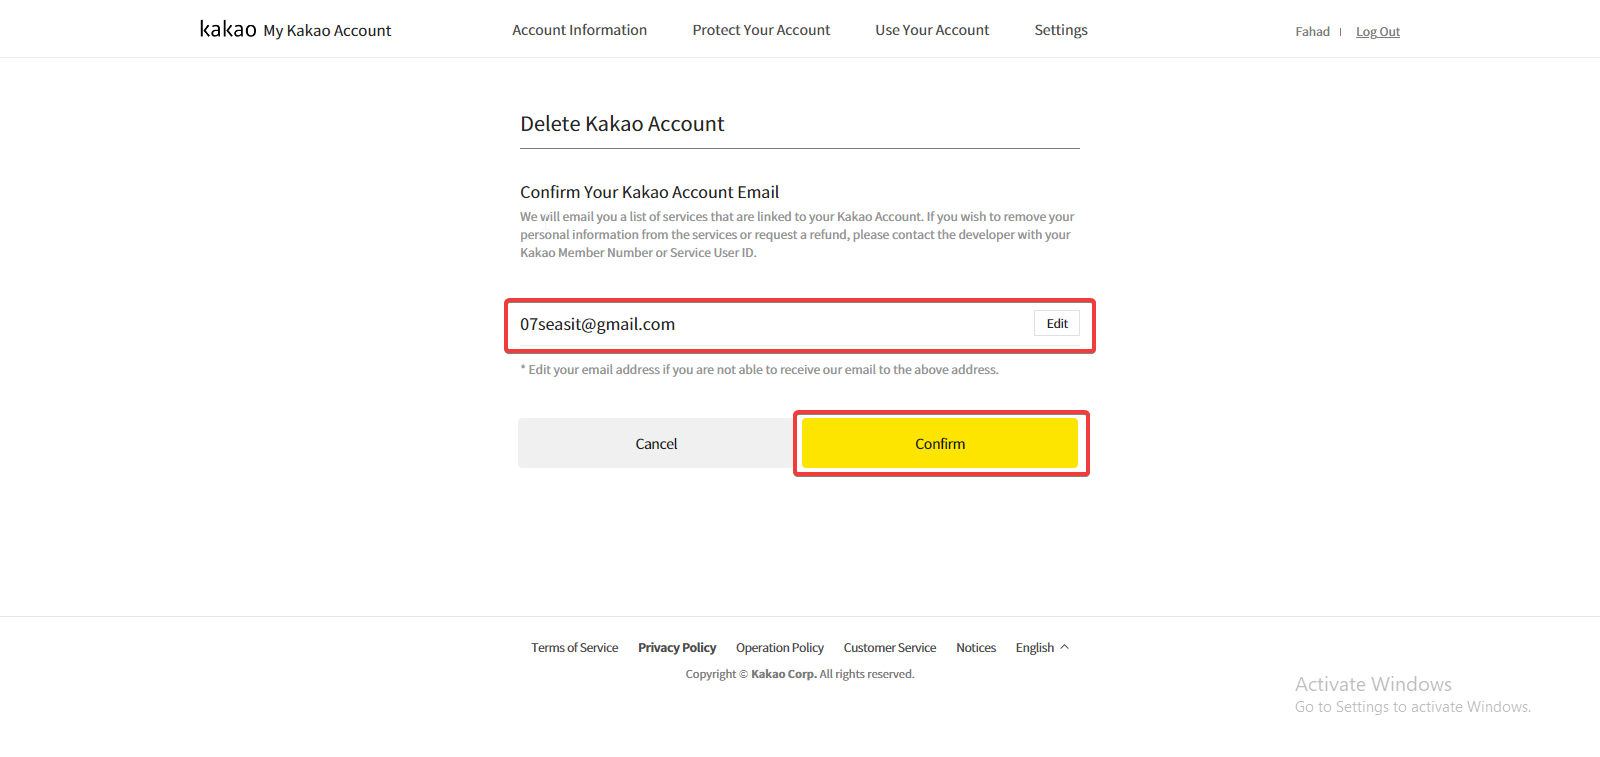 How to delete Kakao Account via website